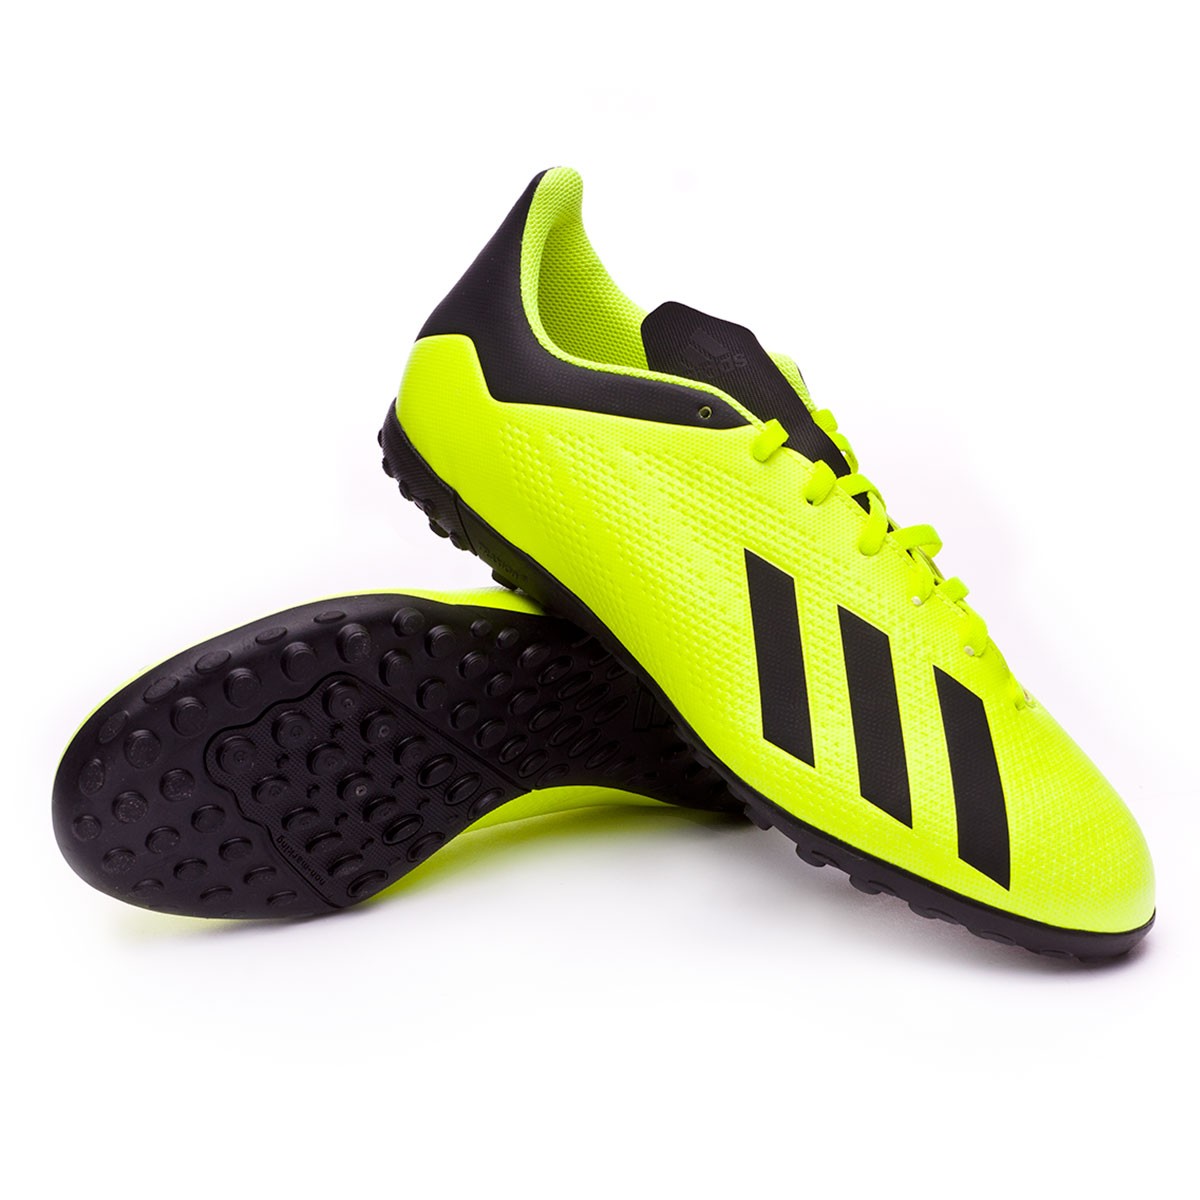 Football Boot adidas X Tango 18.4 Turf Solar yellow-Core black-White -  Football store Fútbol Emotion